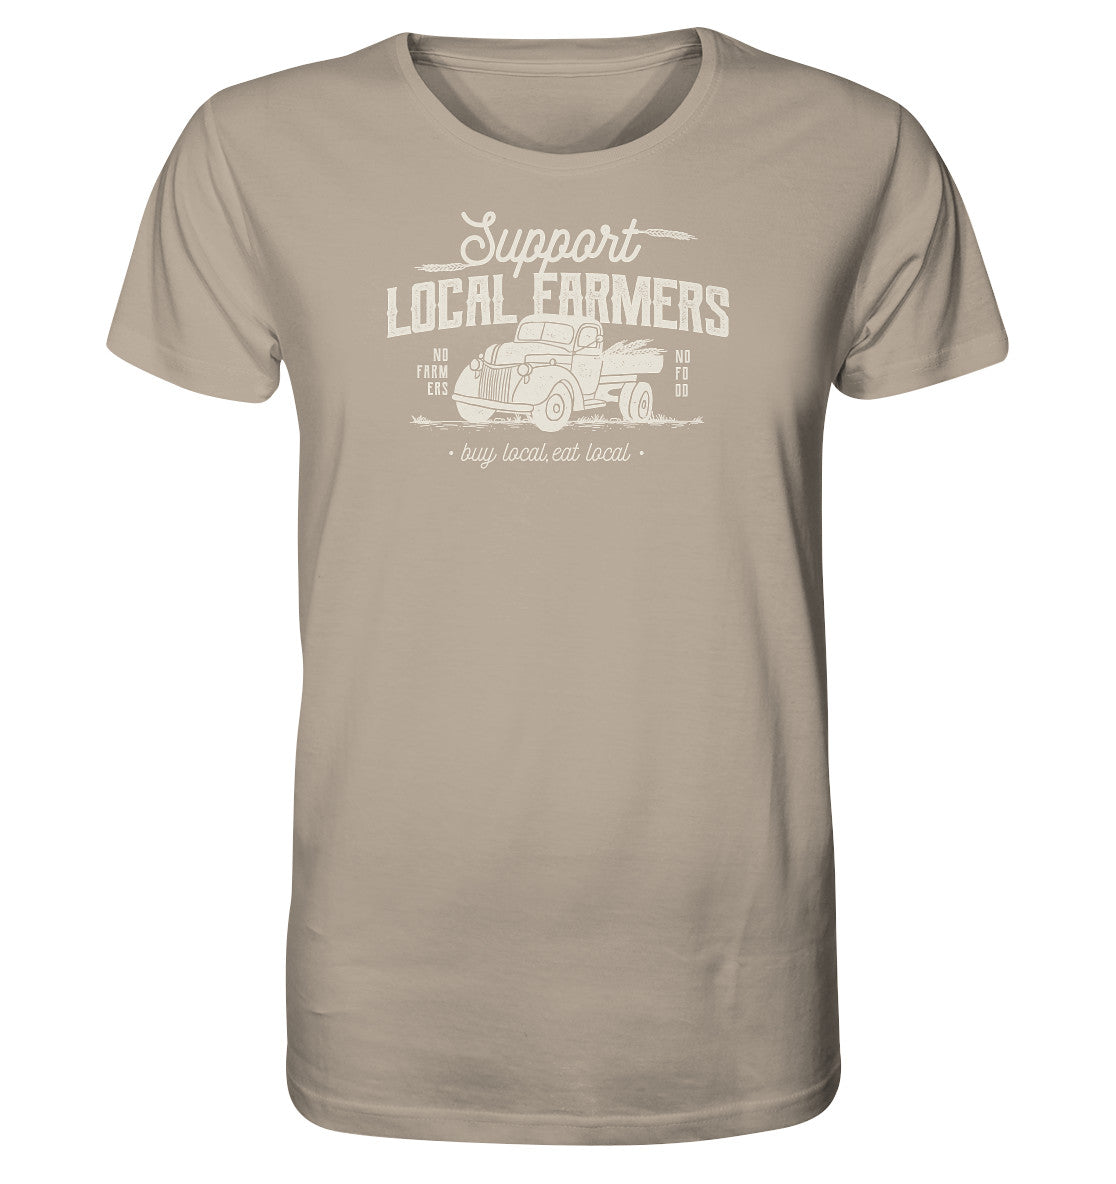 Support local farmer. No farmers no food. Shirt Landwirtschaft. Dorfkram® sand beige